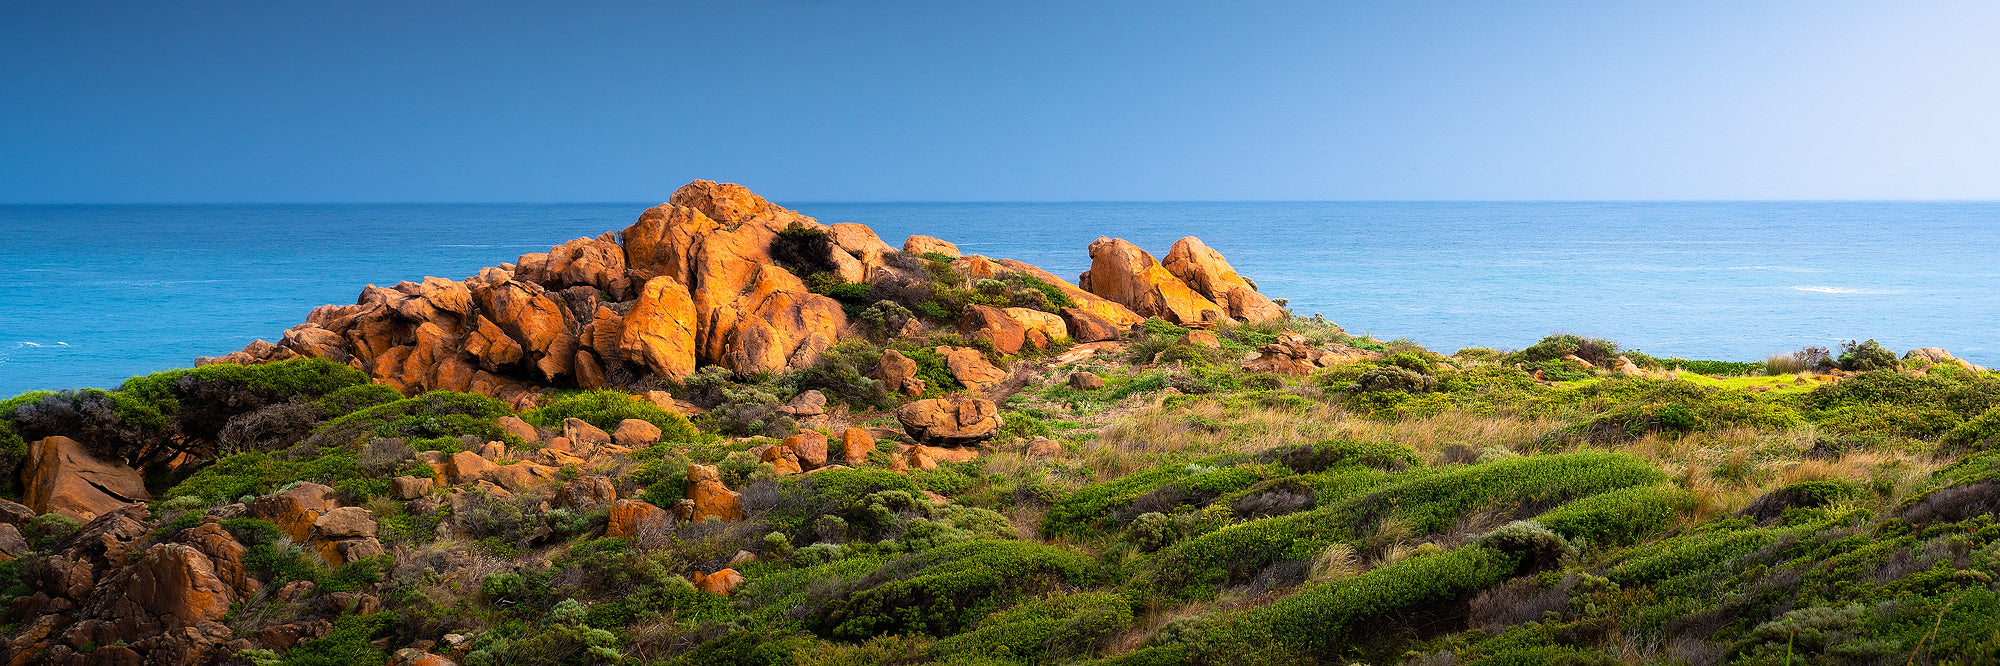 Rocks at Indijup Beach, Western Australia